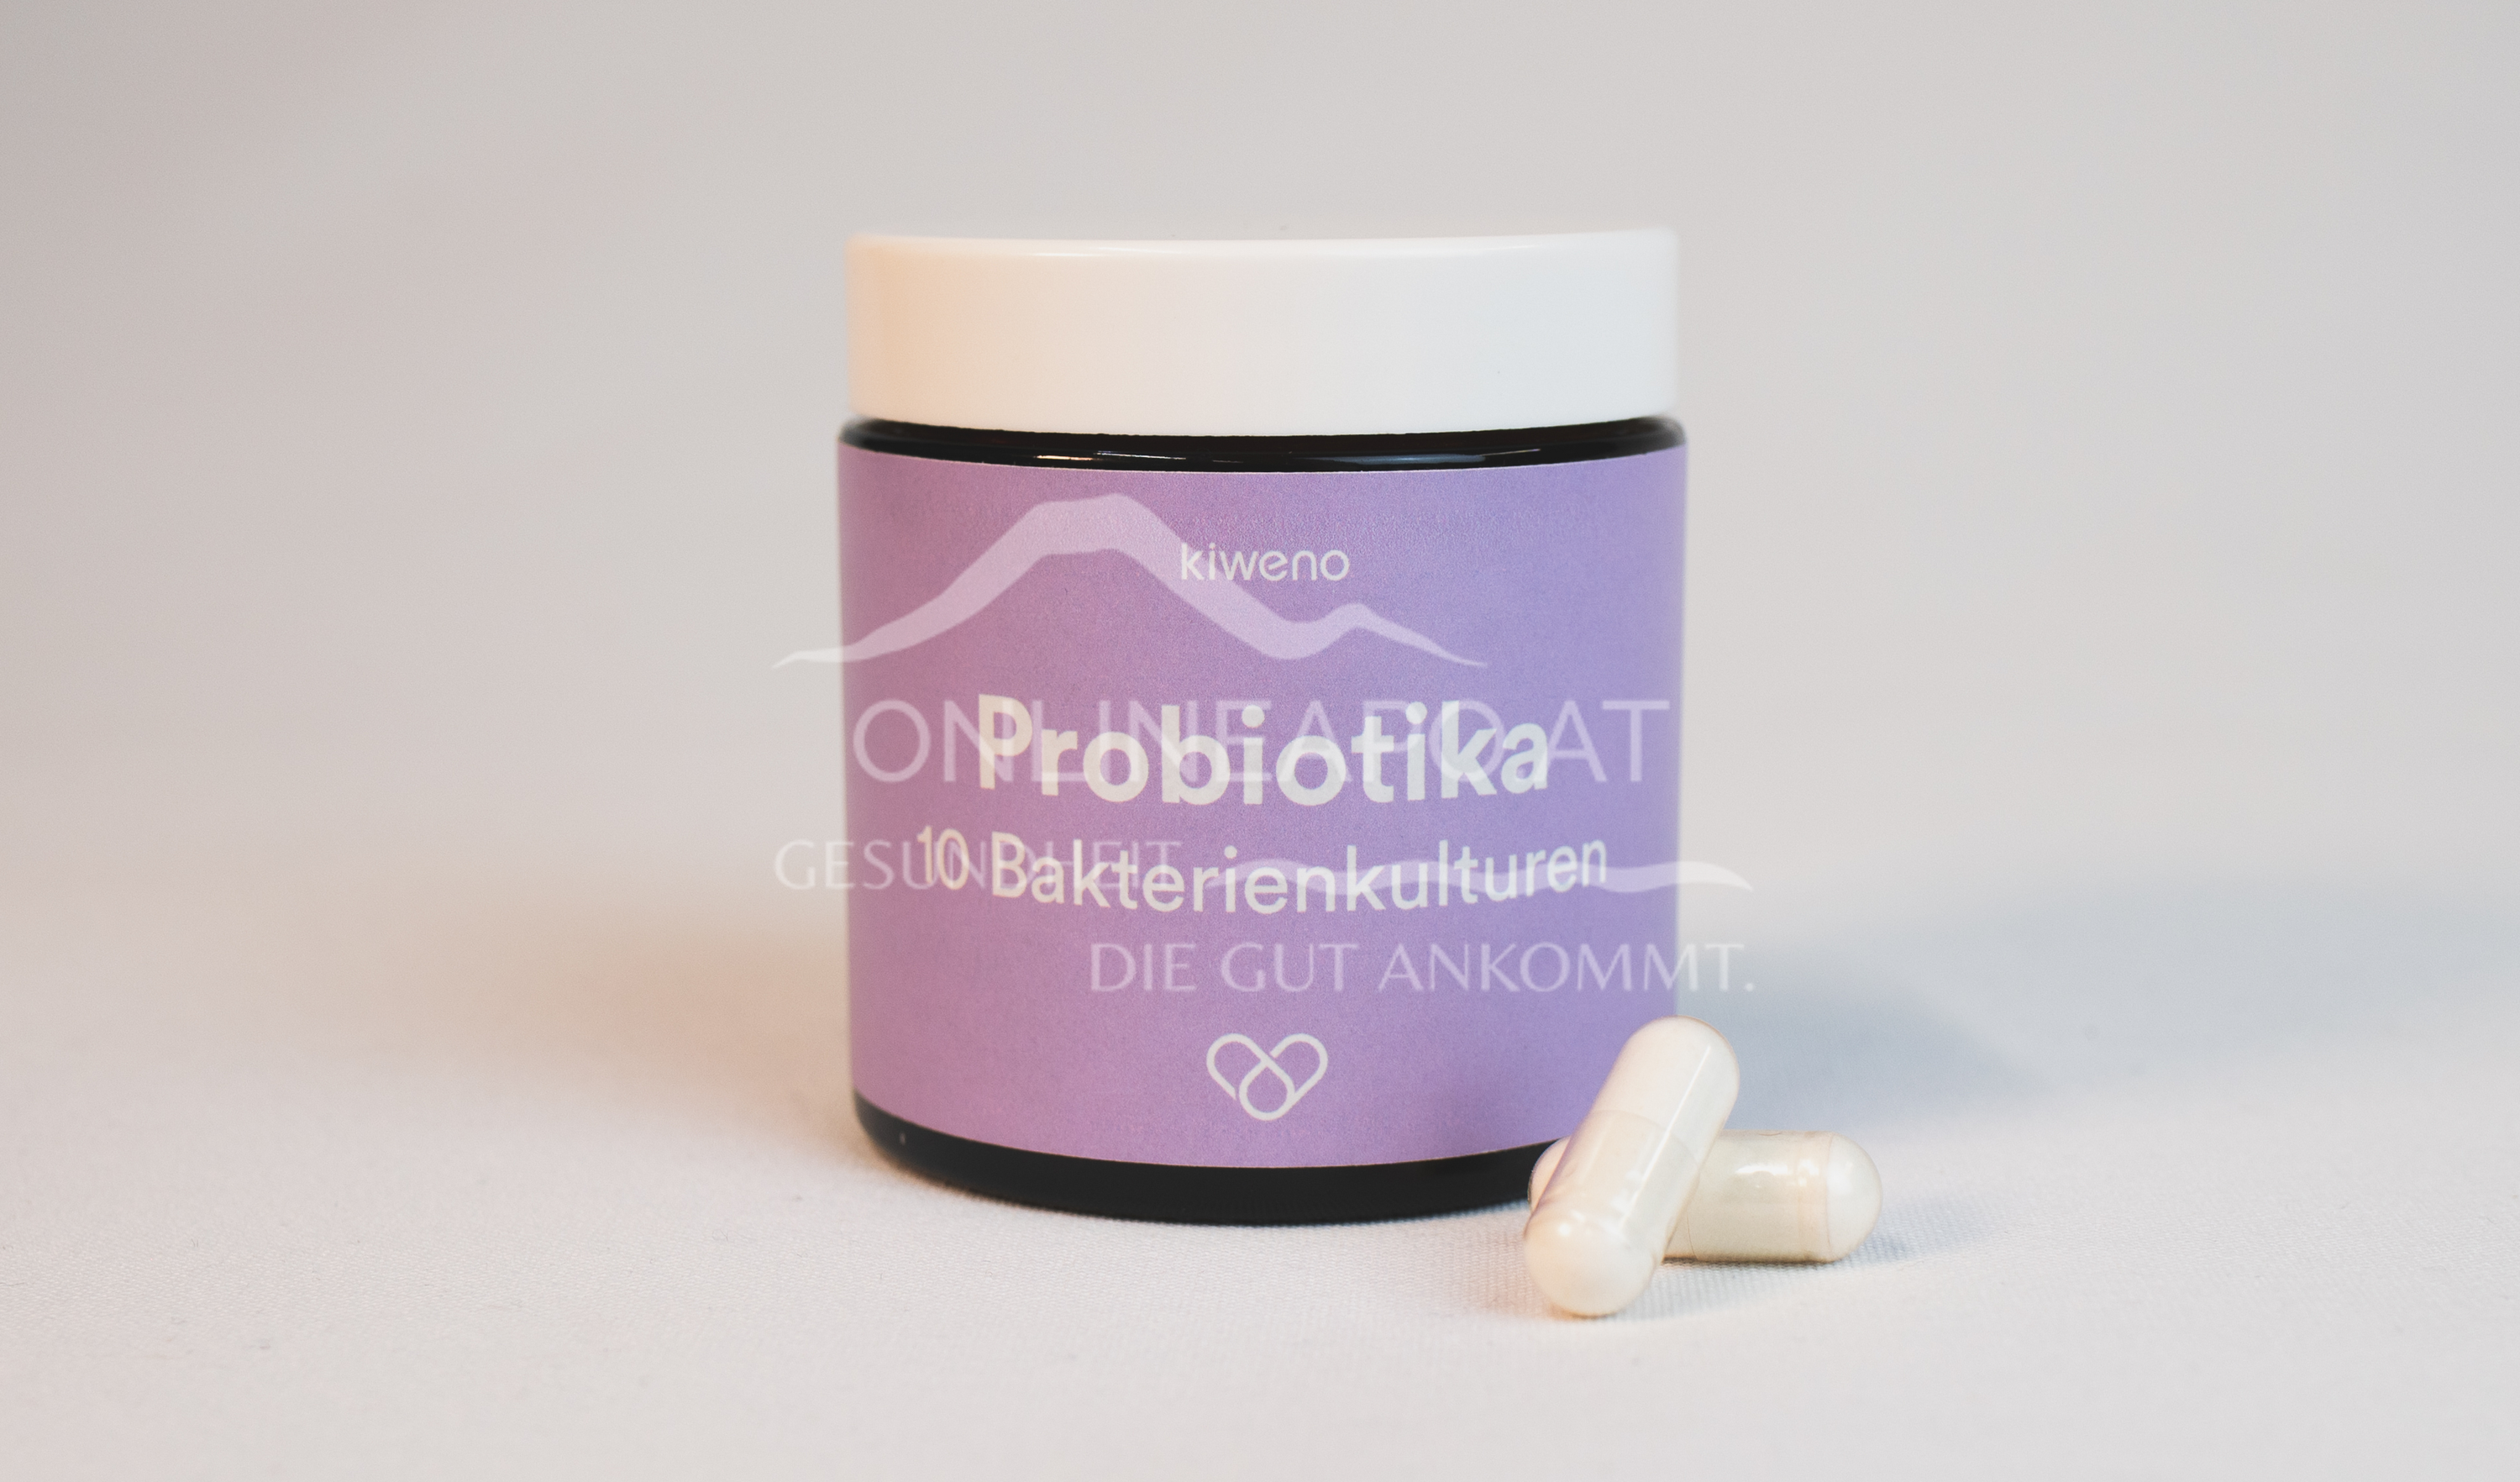 Kiweno Probiotika Kapseln mit 10 Bakterienkulturen